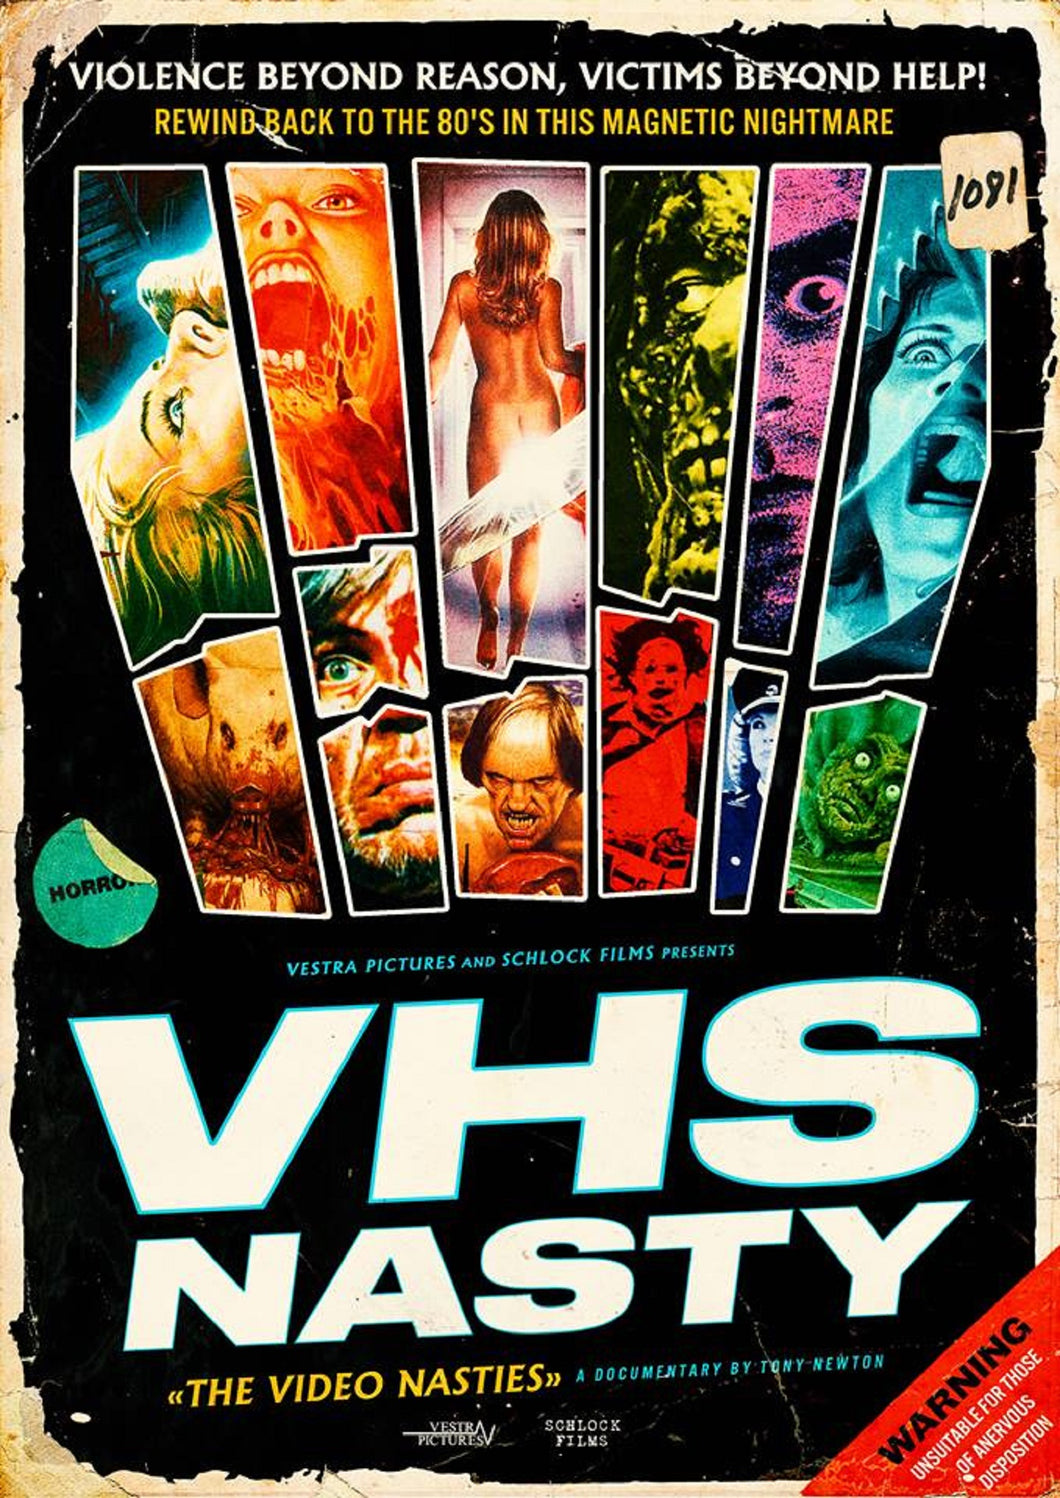 VHS Nasty (DVD)